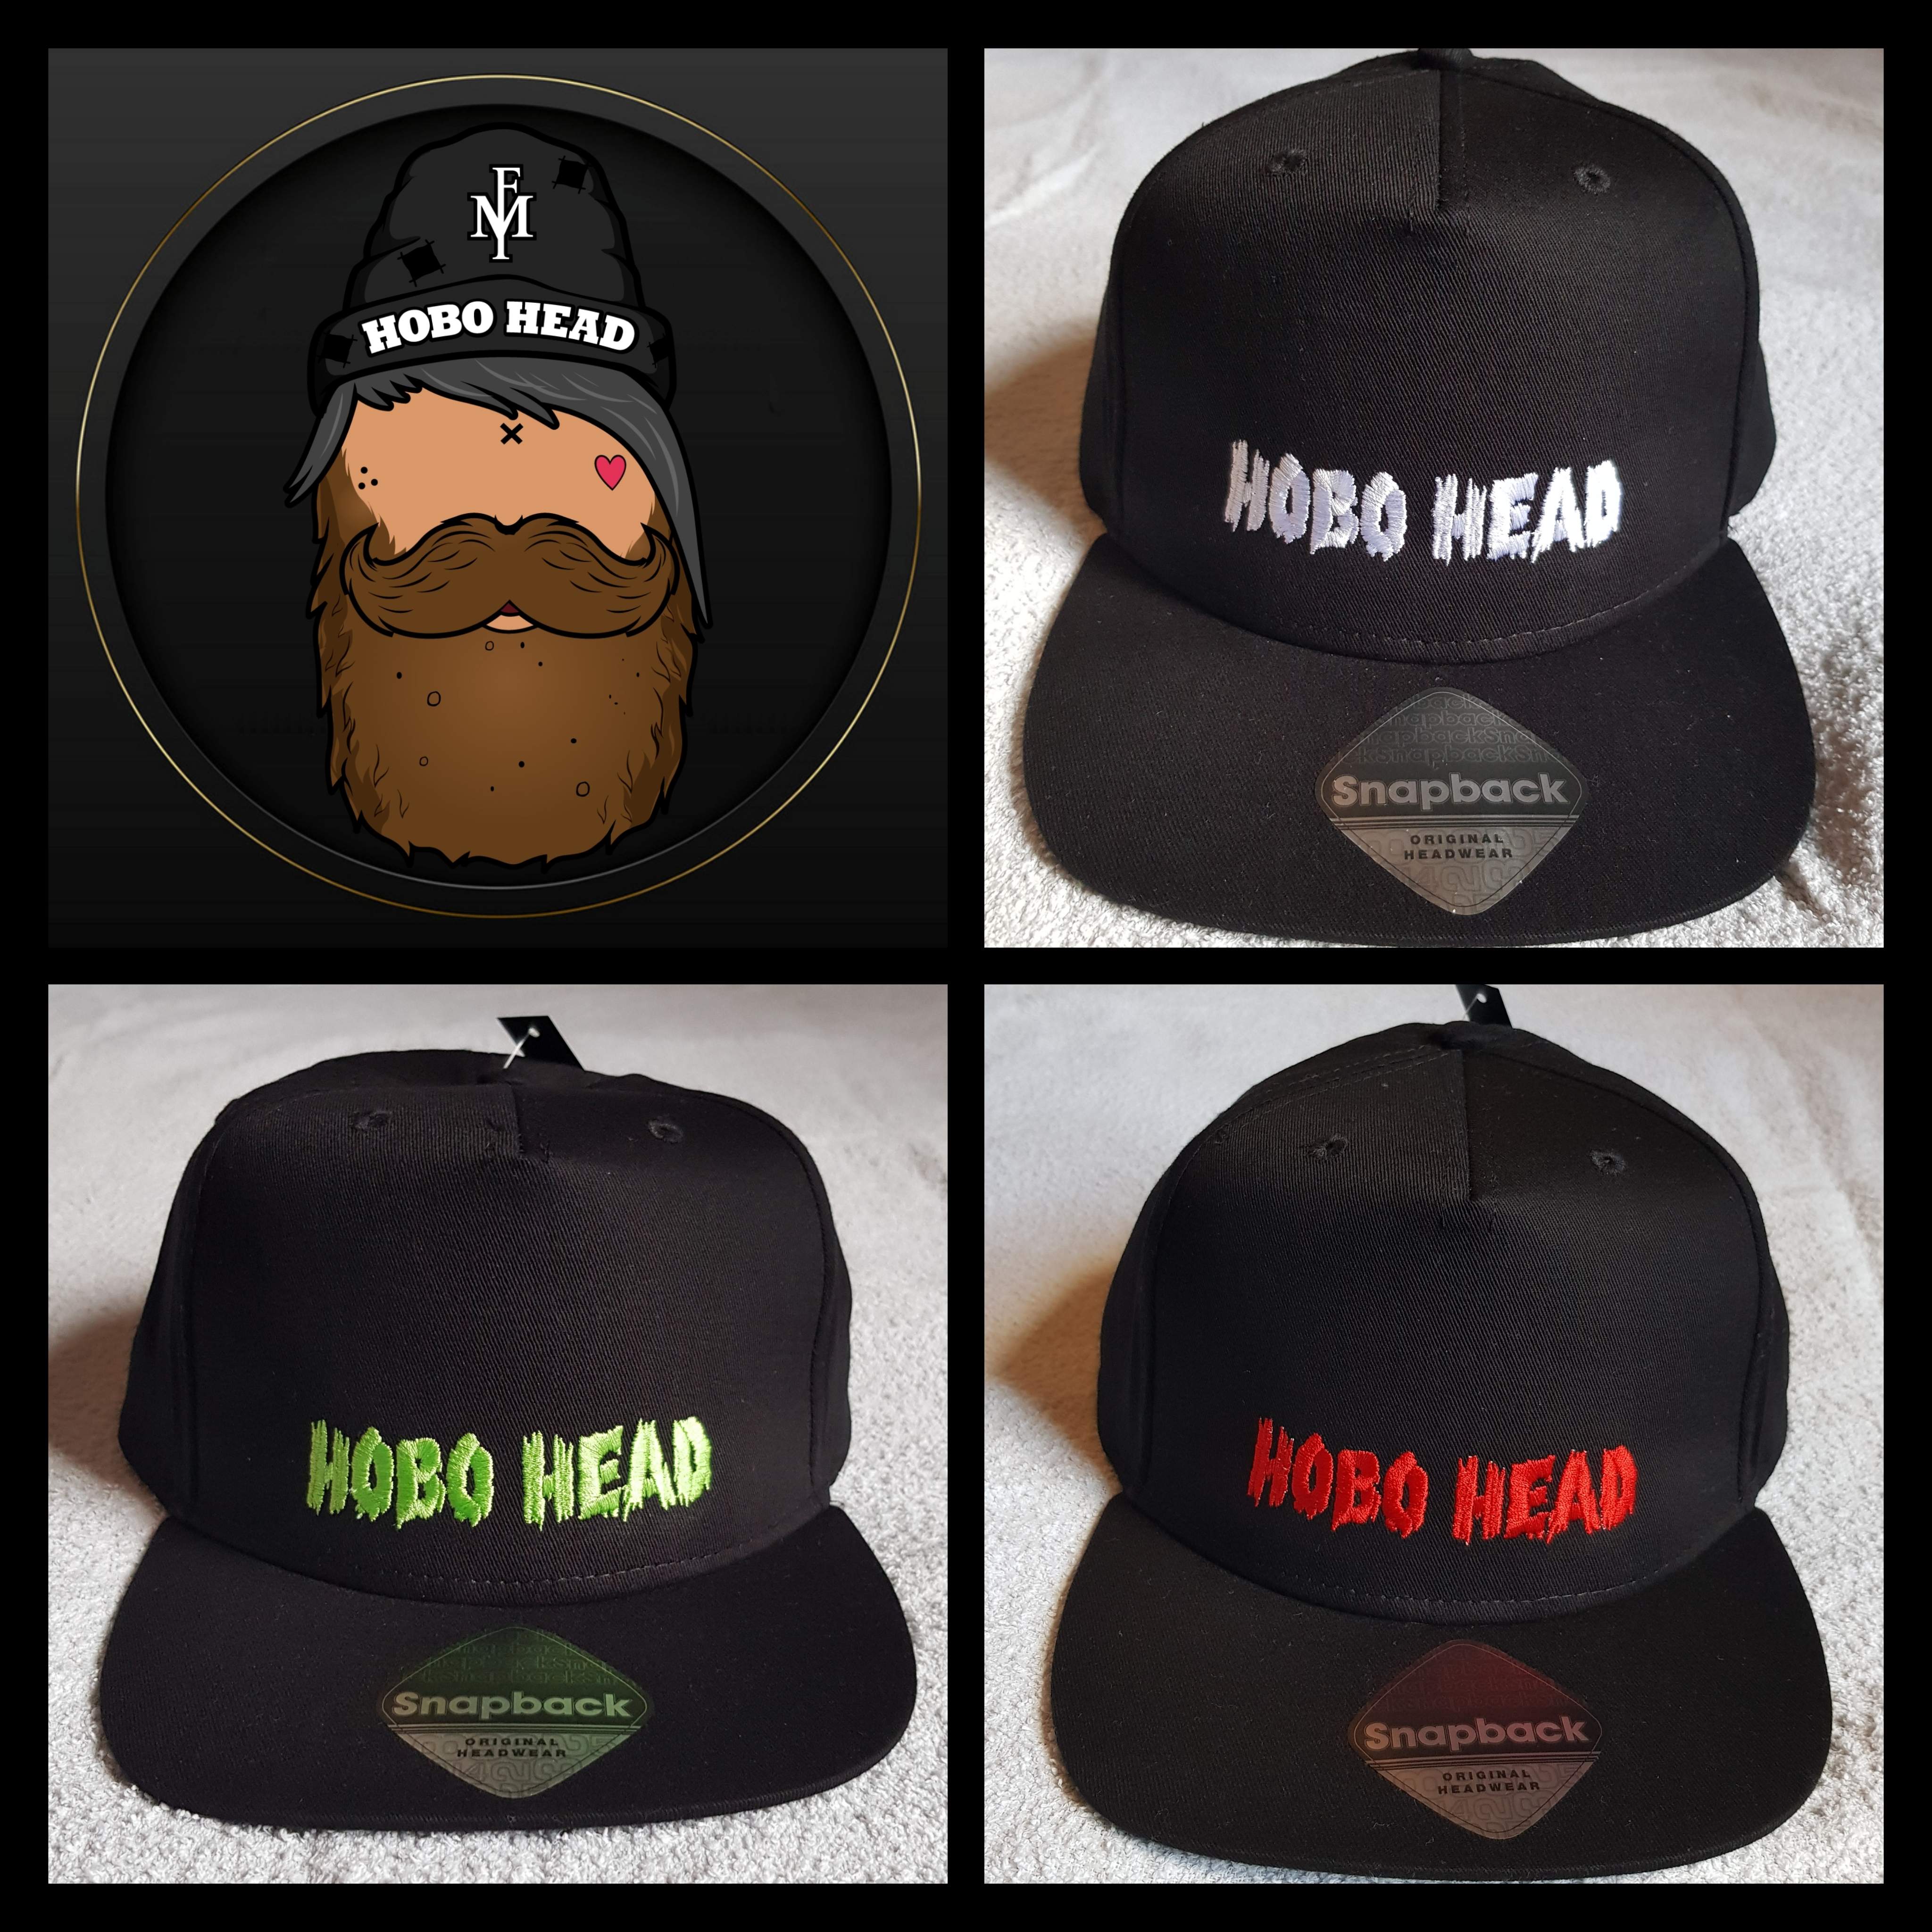 HOBO HEAD Snapback £12.99